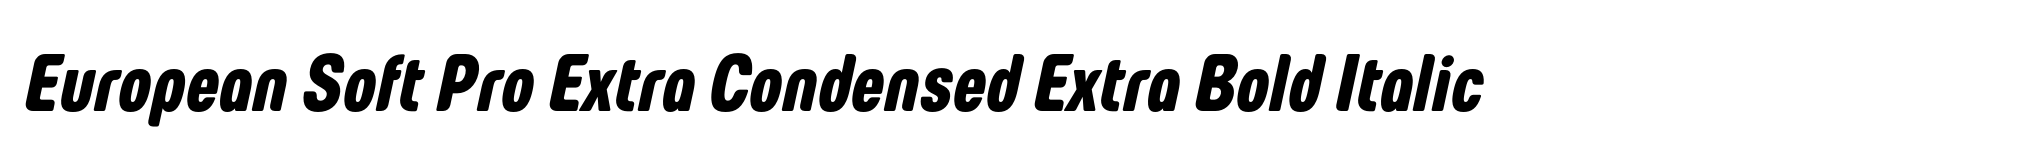 European Soft Pro Extra Condensed Extra Bold Italic image